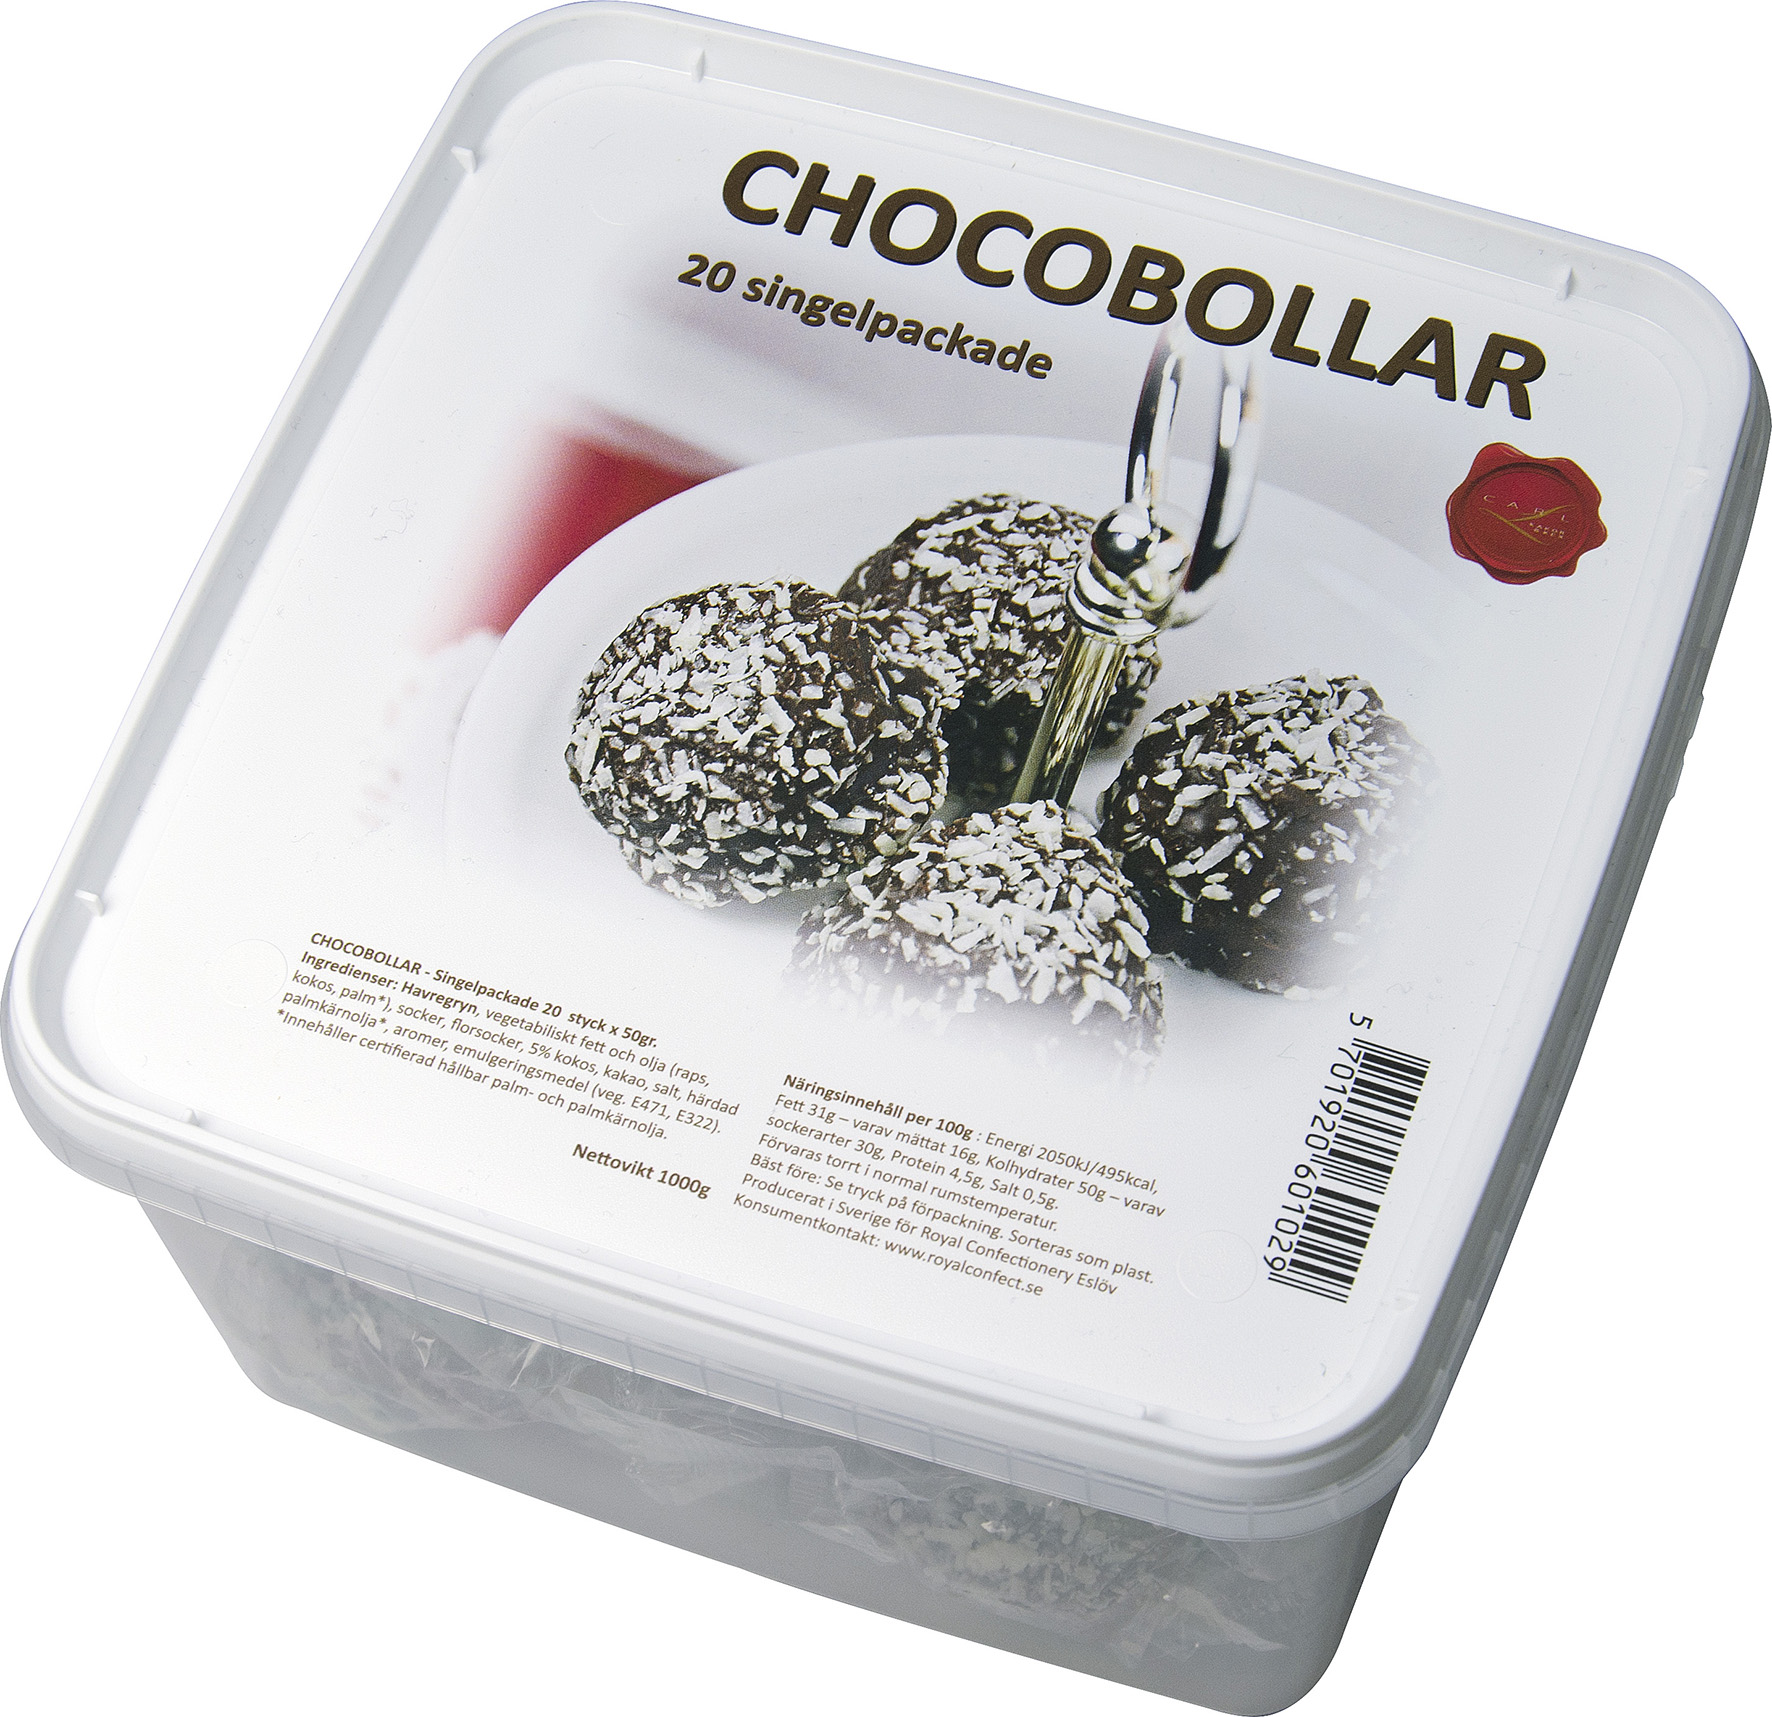 [8556468] Chocobollar singelpack 1kg 20p